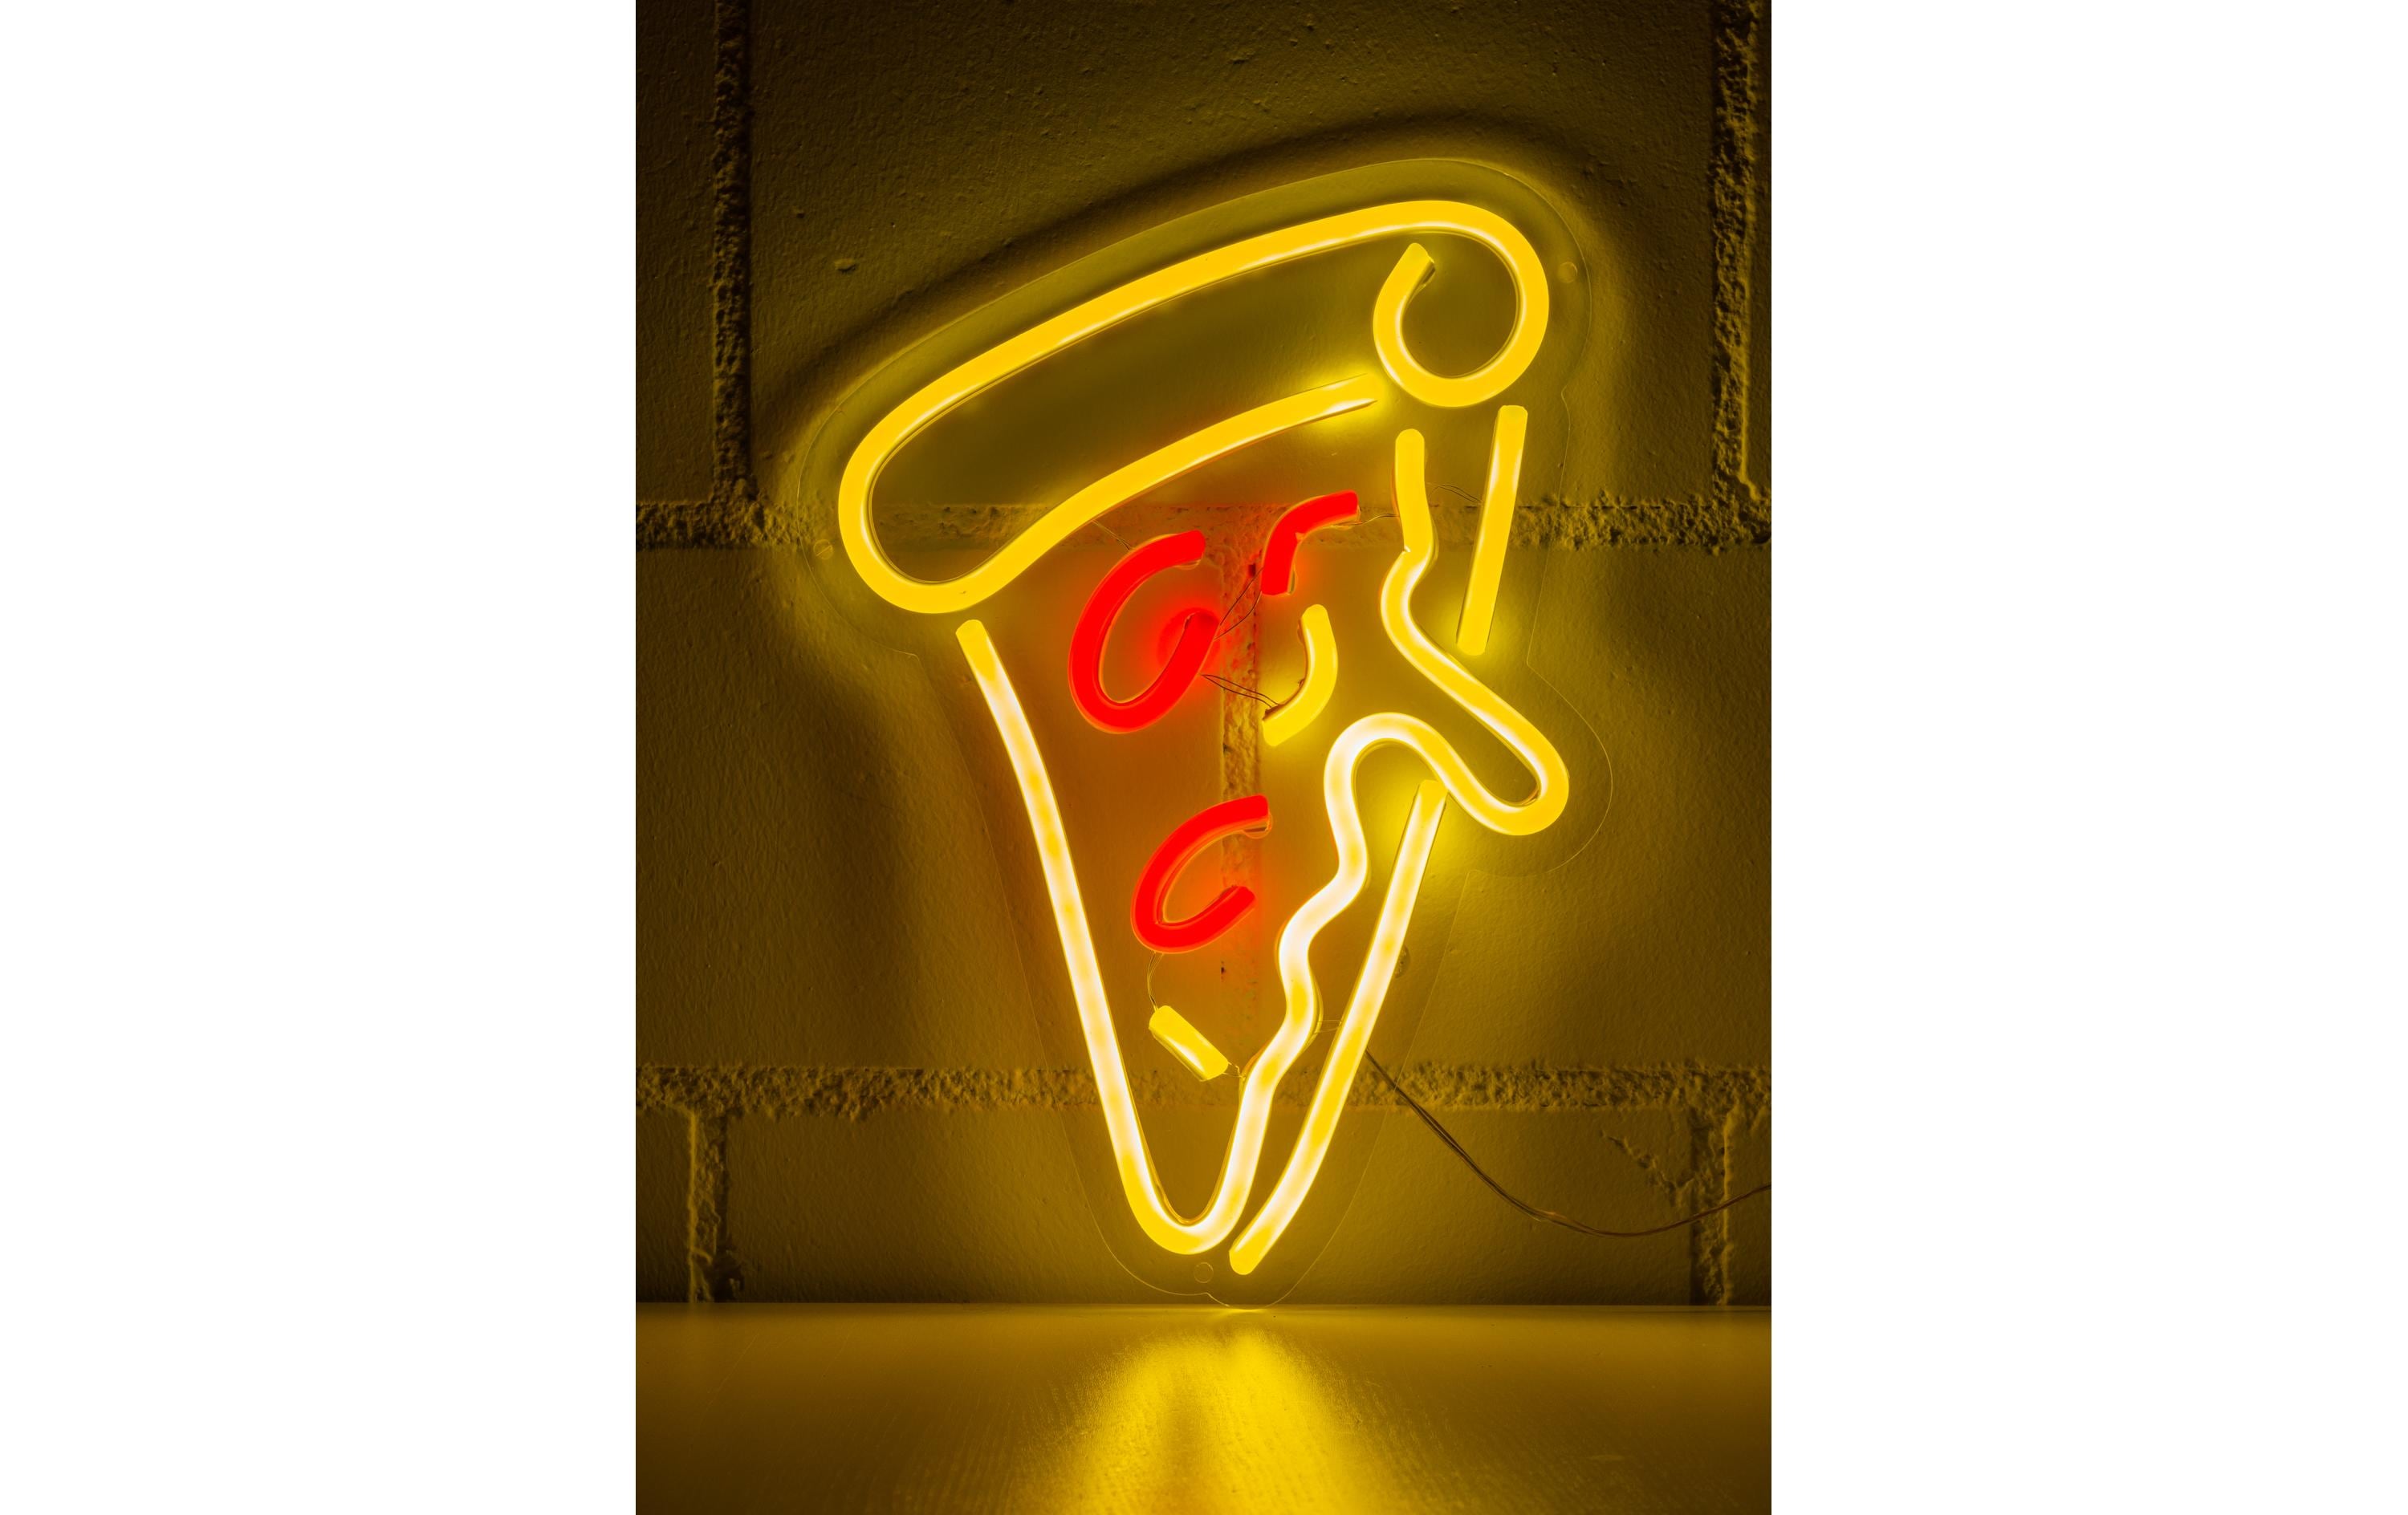 Vegas Lights LED Dekolicht Neonschild Pizza 30 x 23 cm